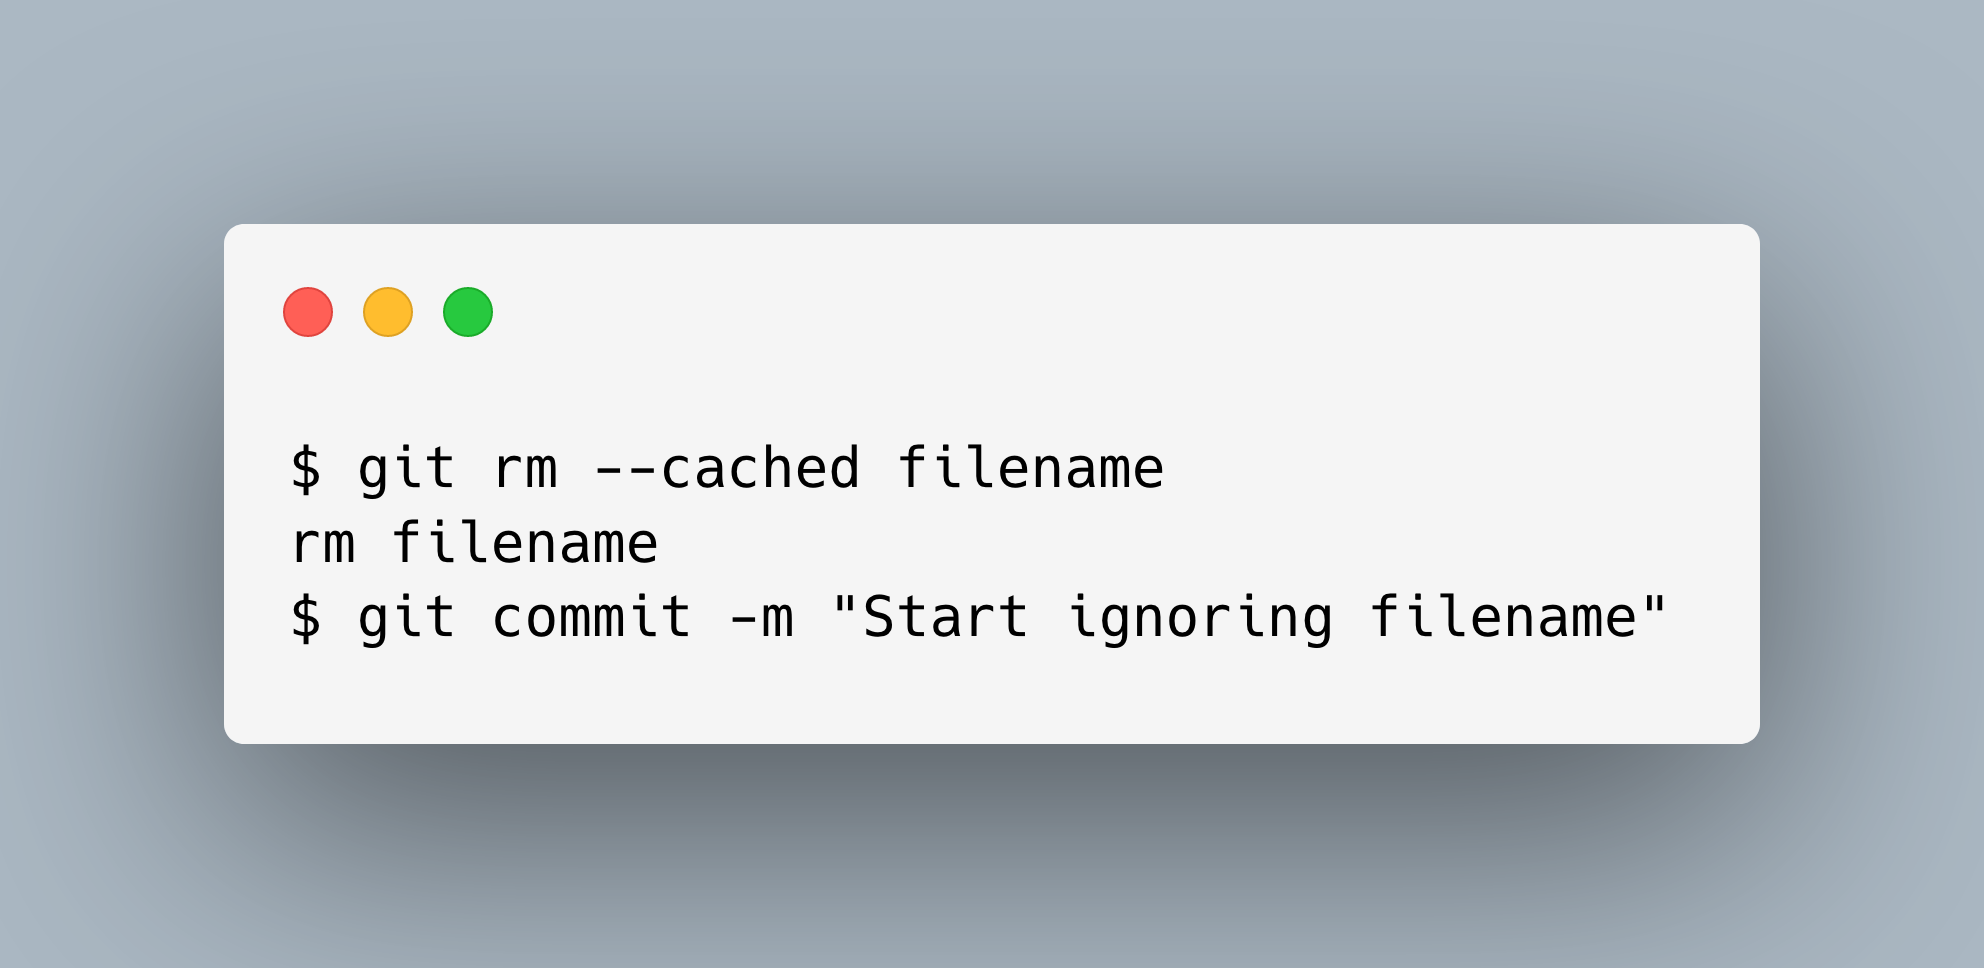 Git remove commands